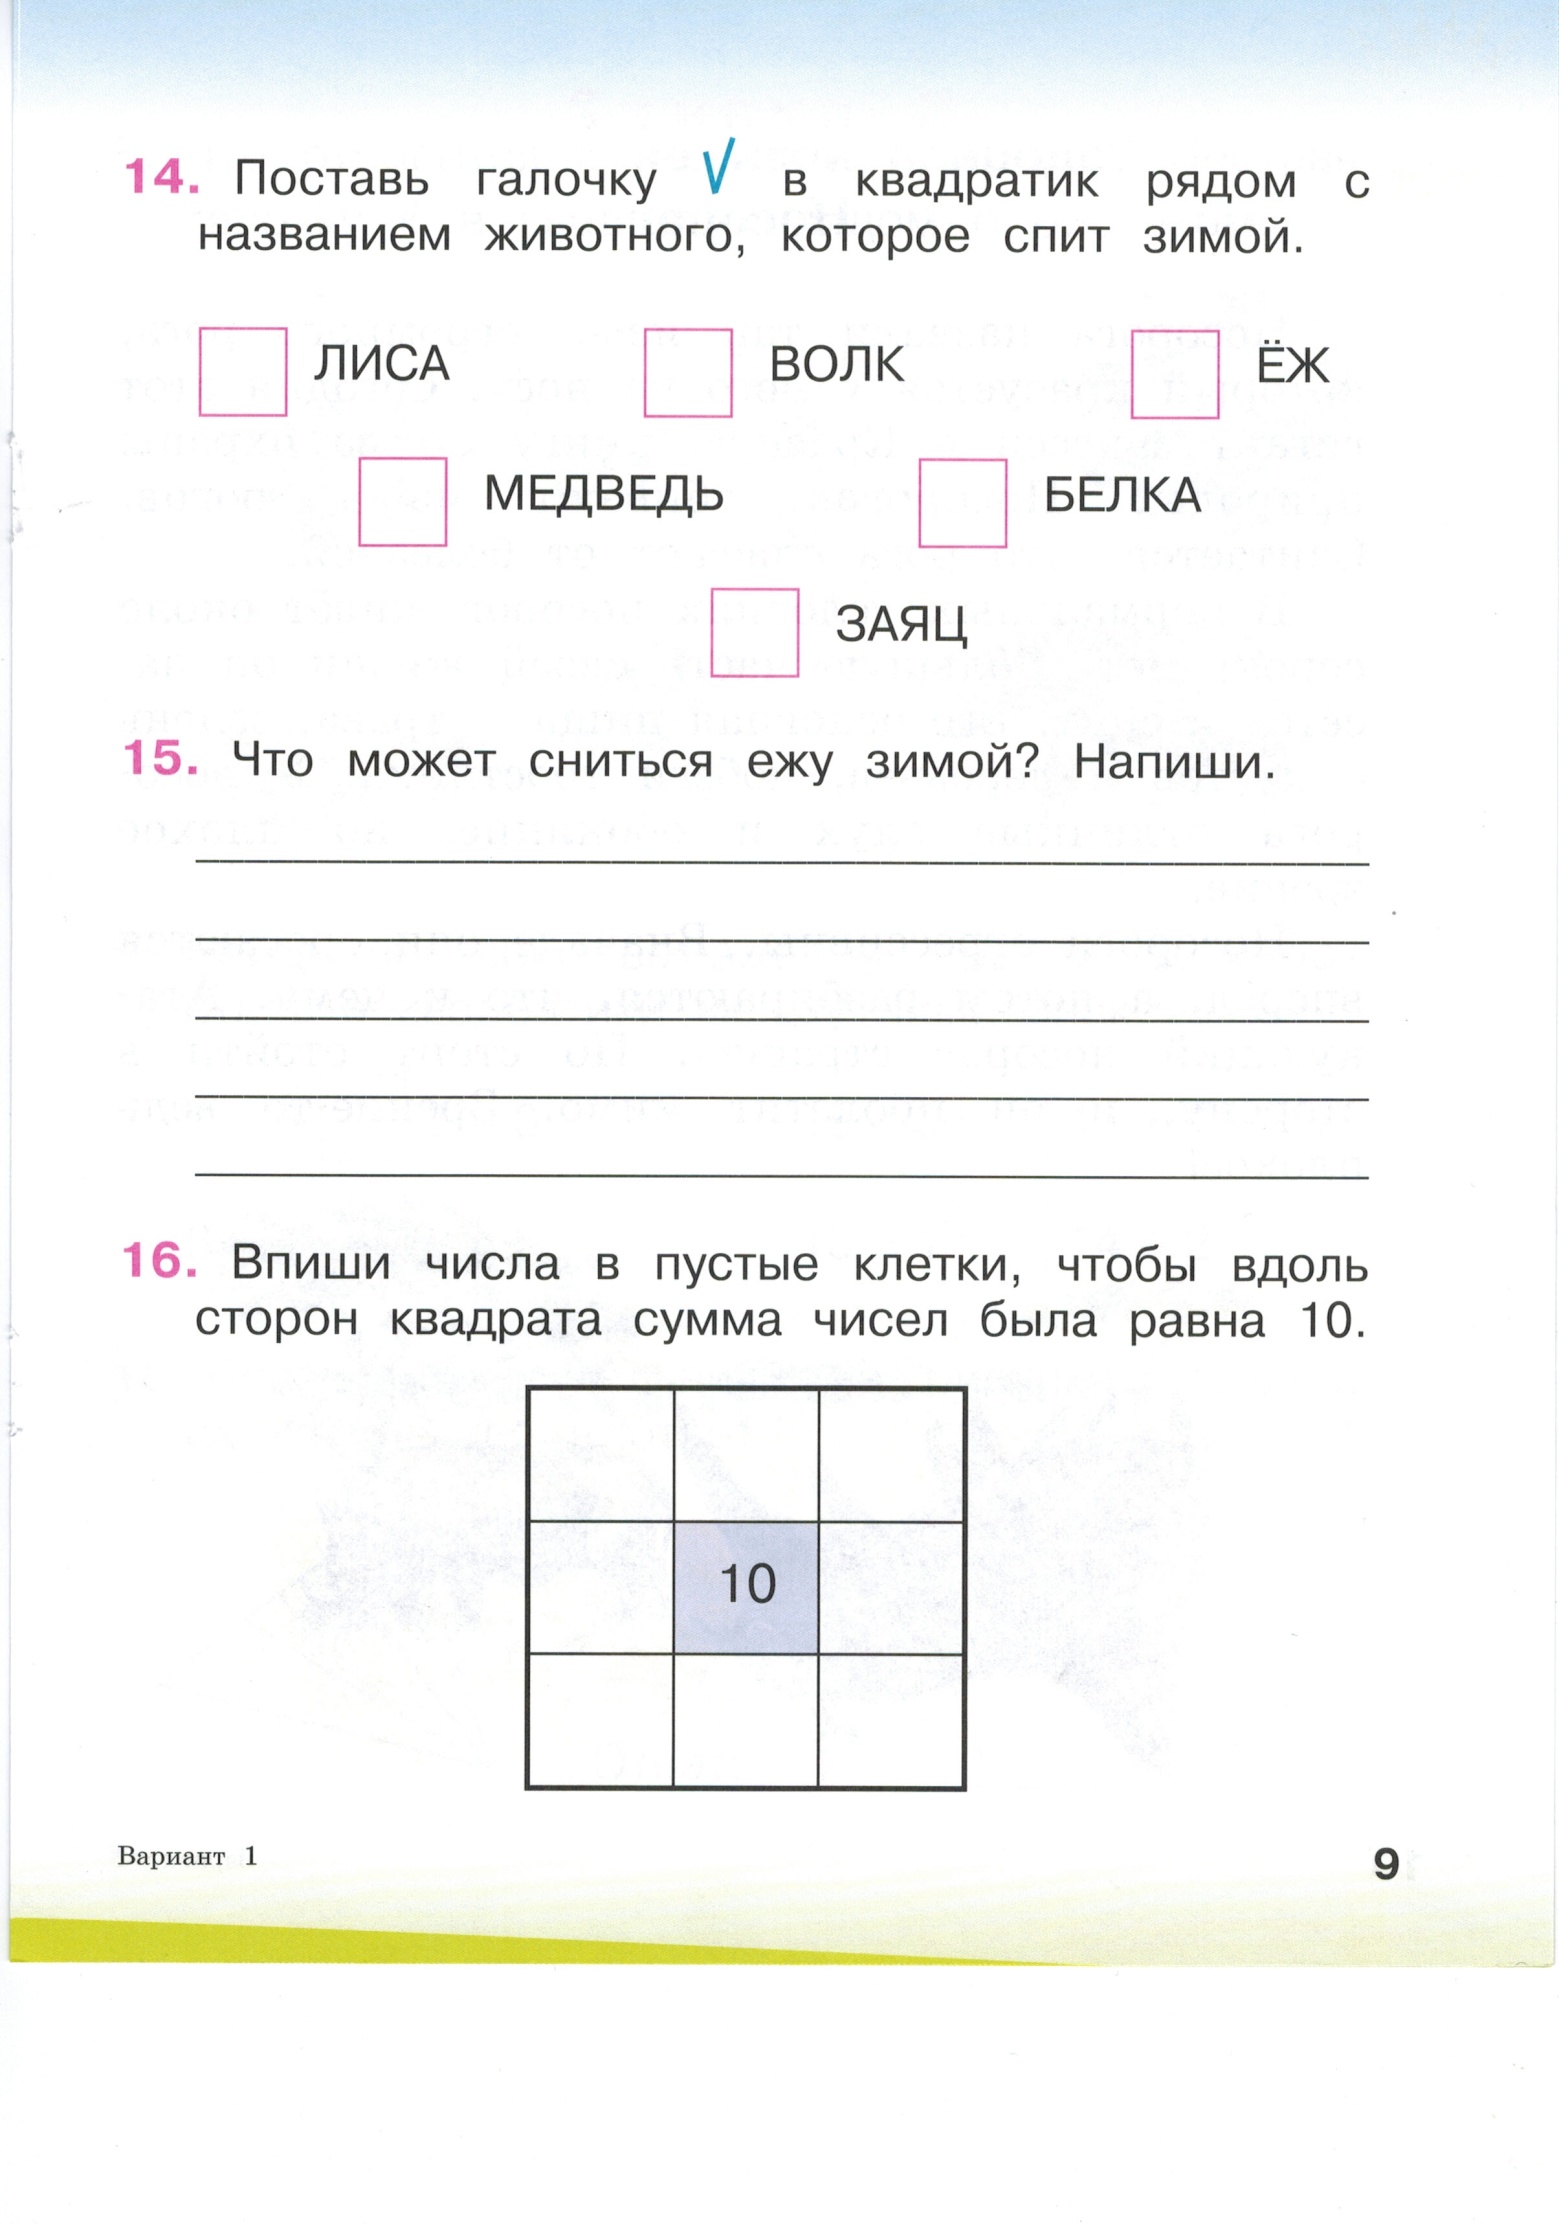 Рабочая программа по русскому языку 1 класс